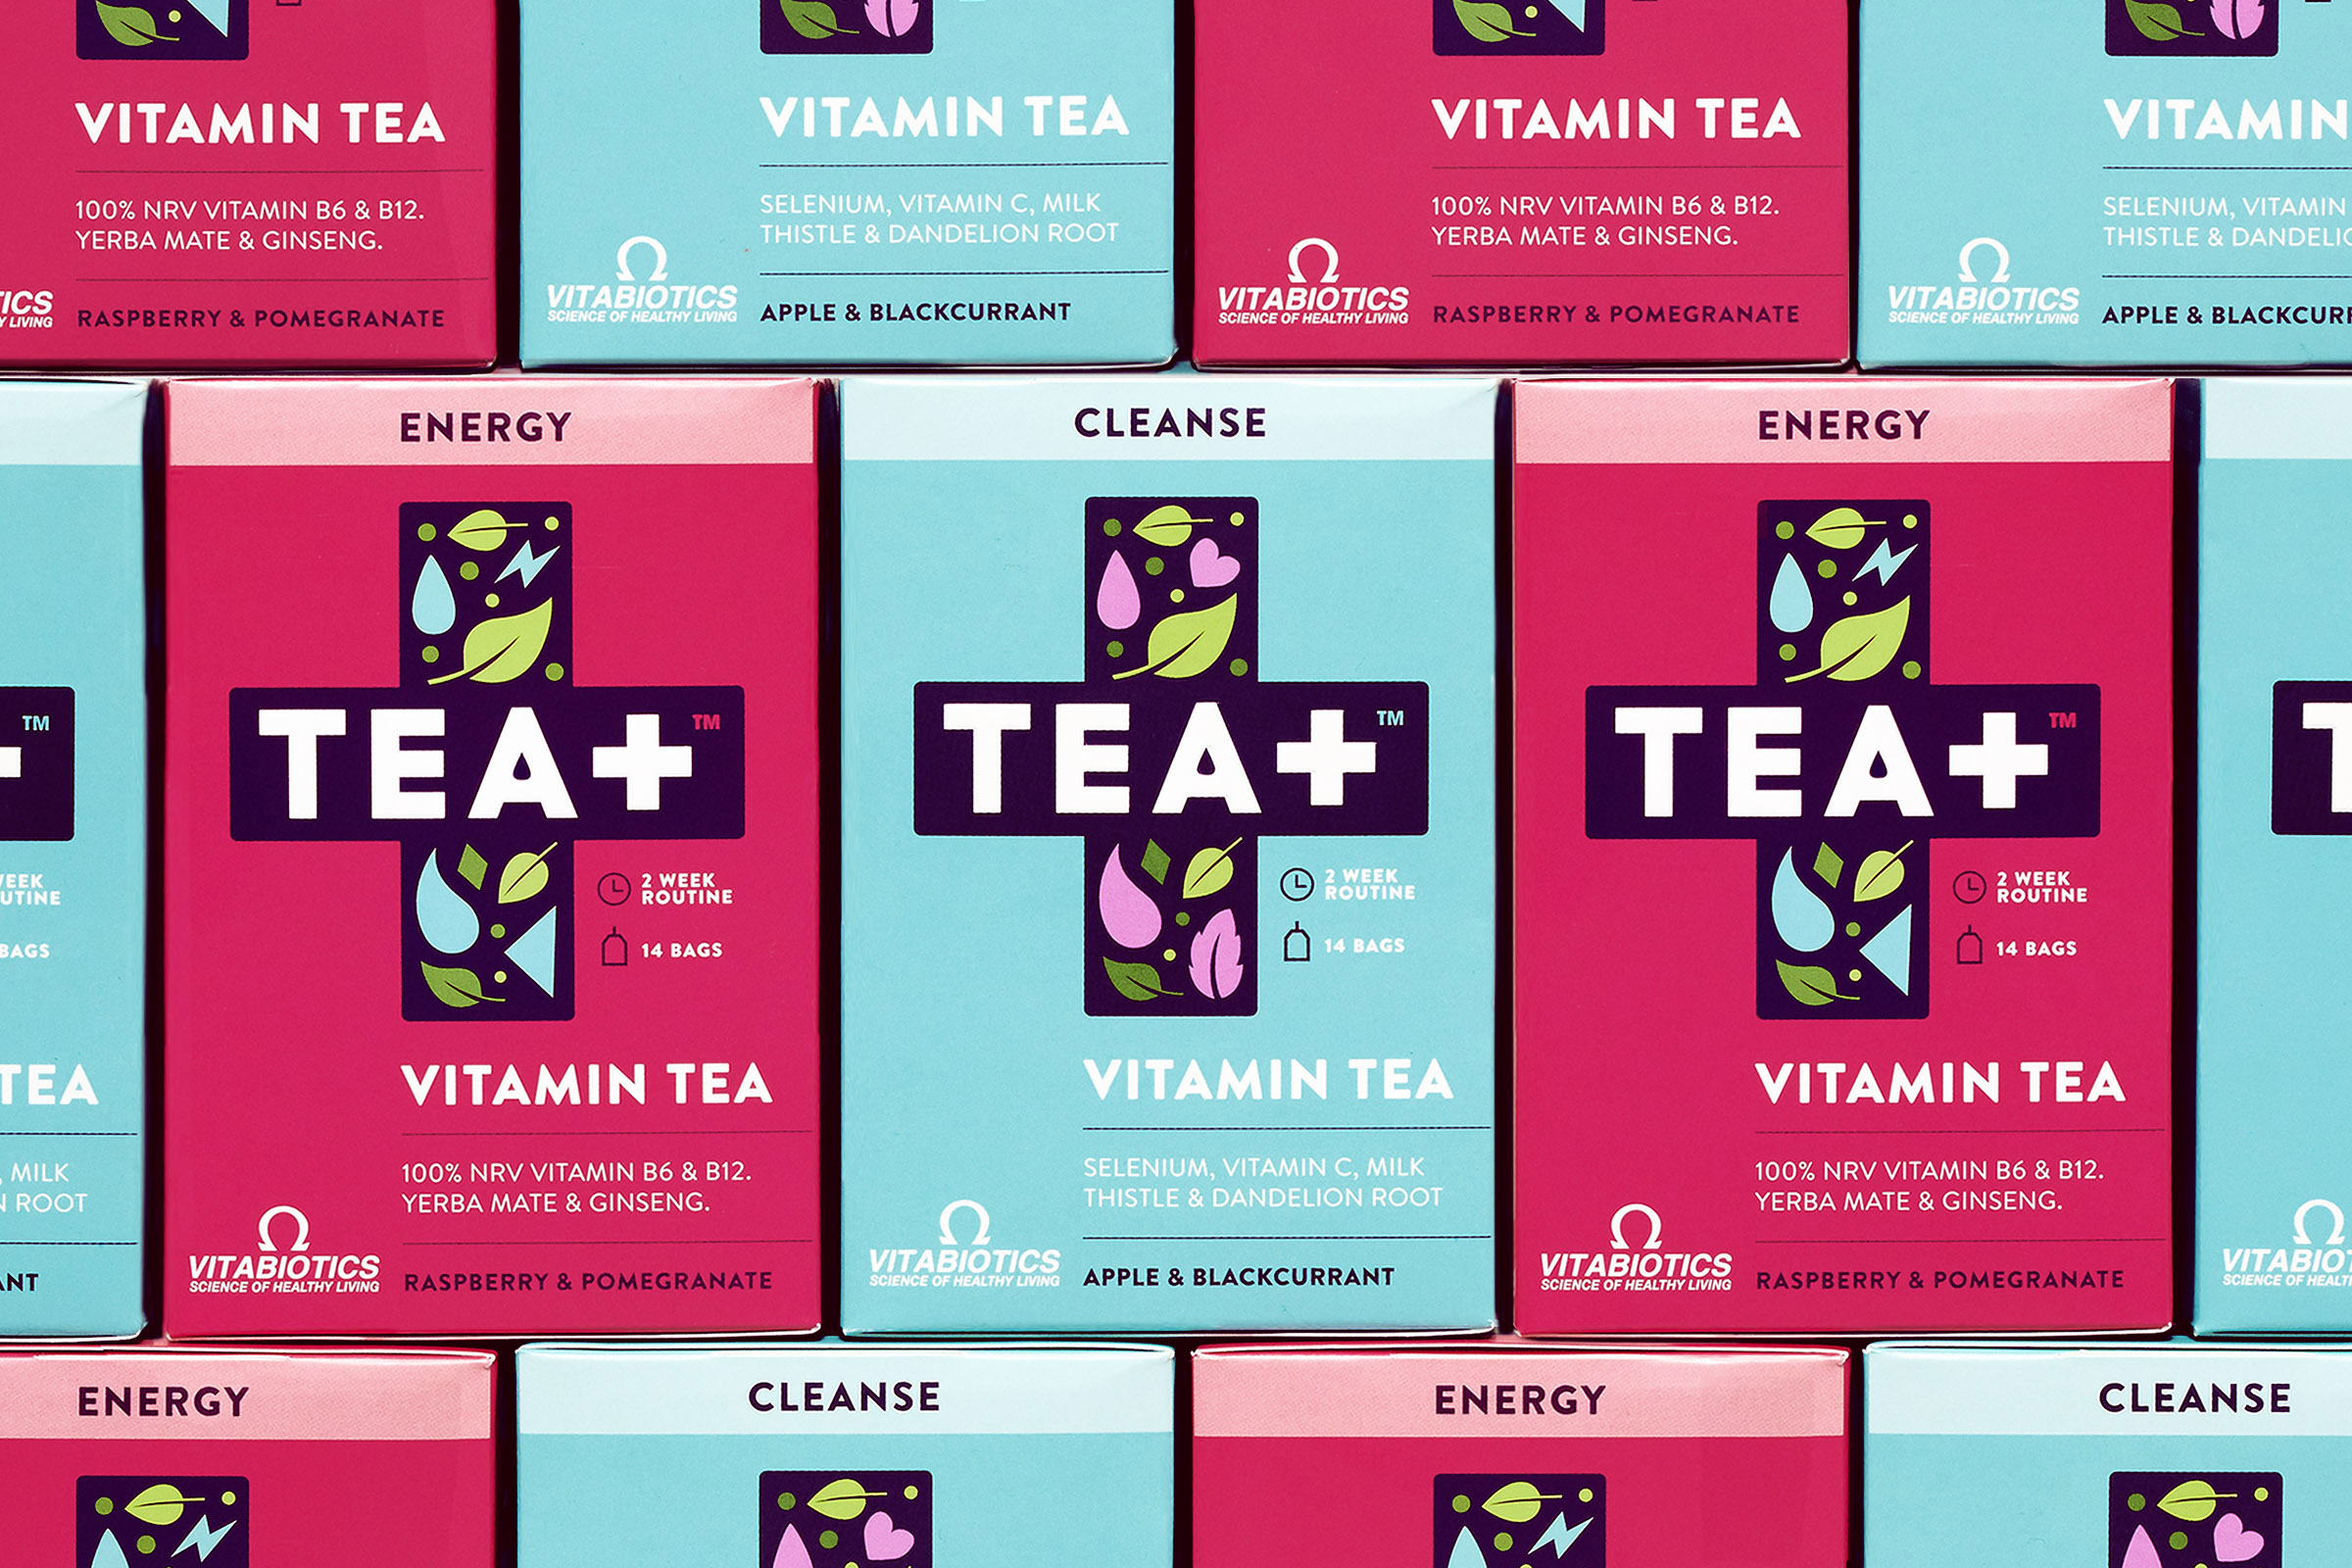 TEA+: The Specialist Vitamin Tea Brand